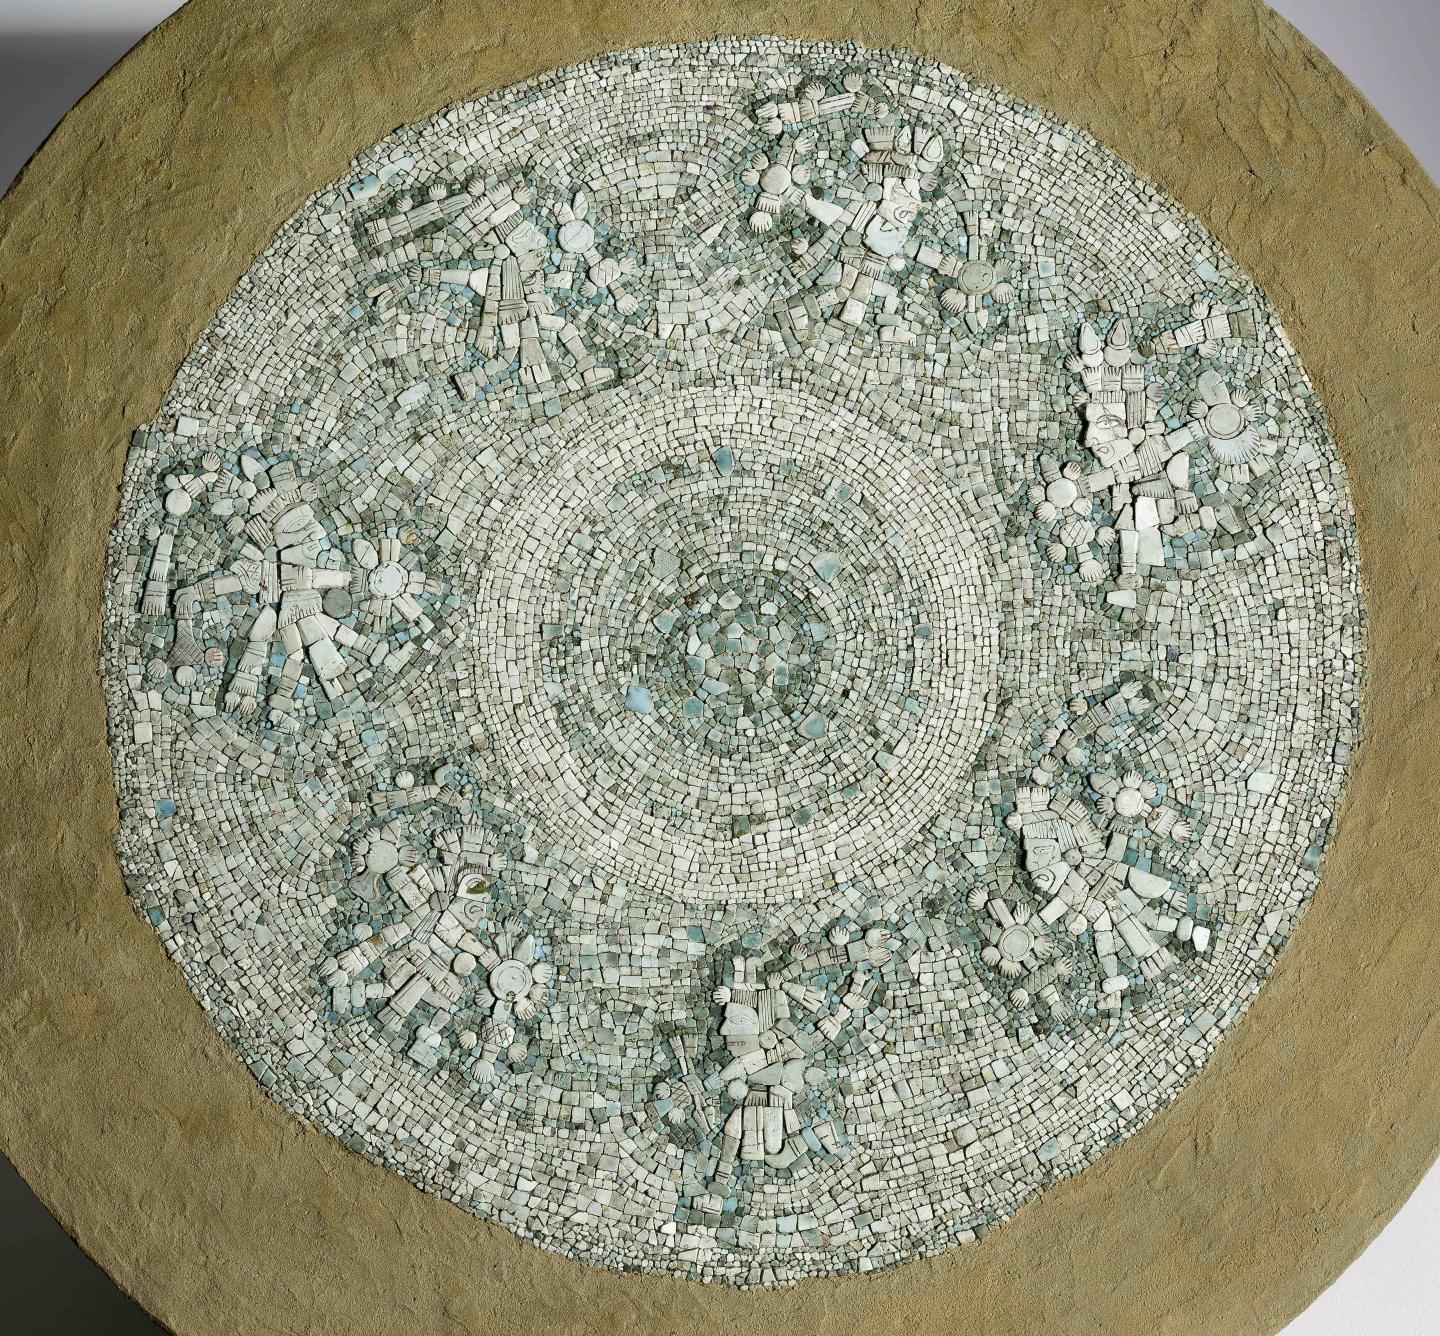 Mesoamerican turquoise mines